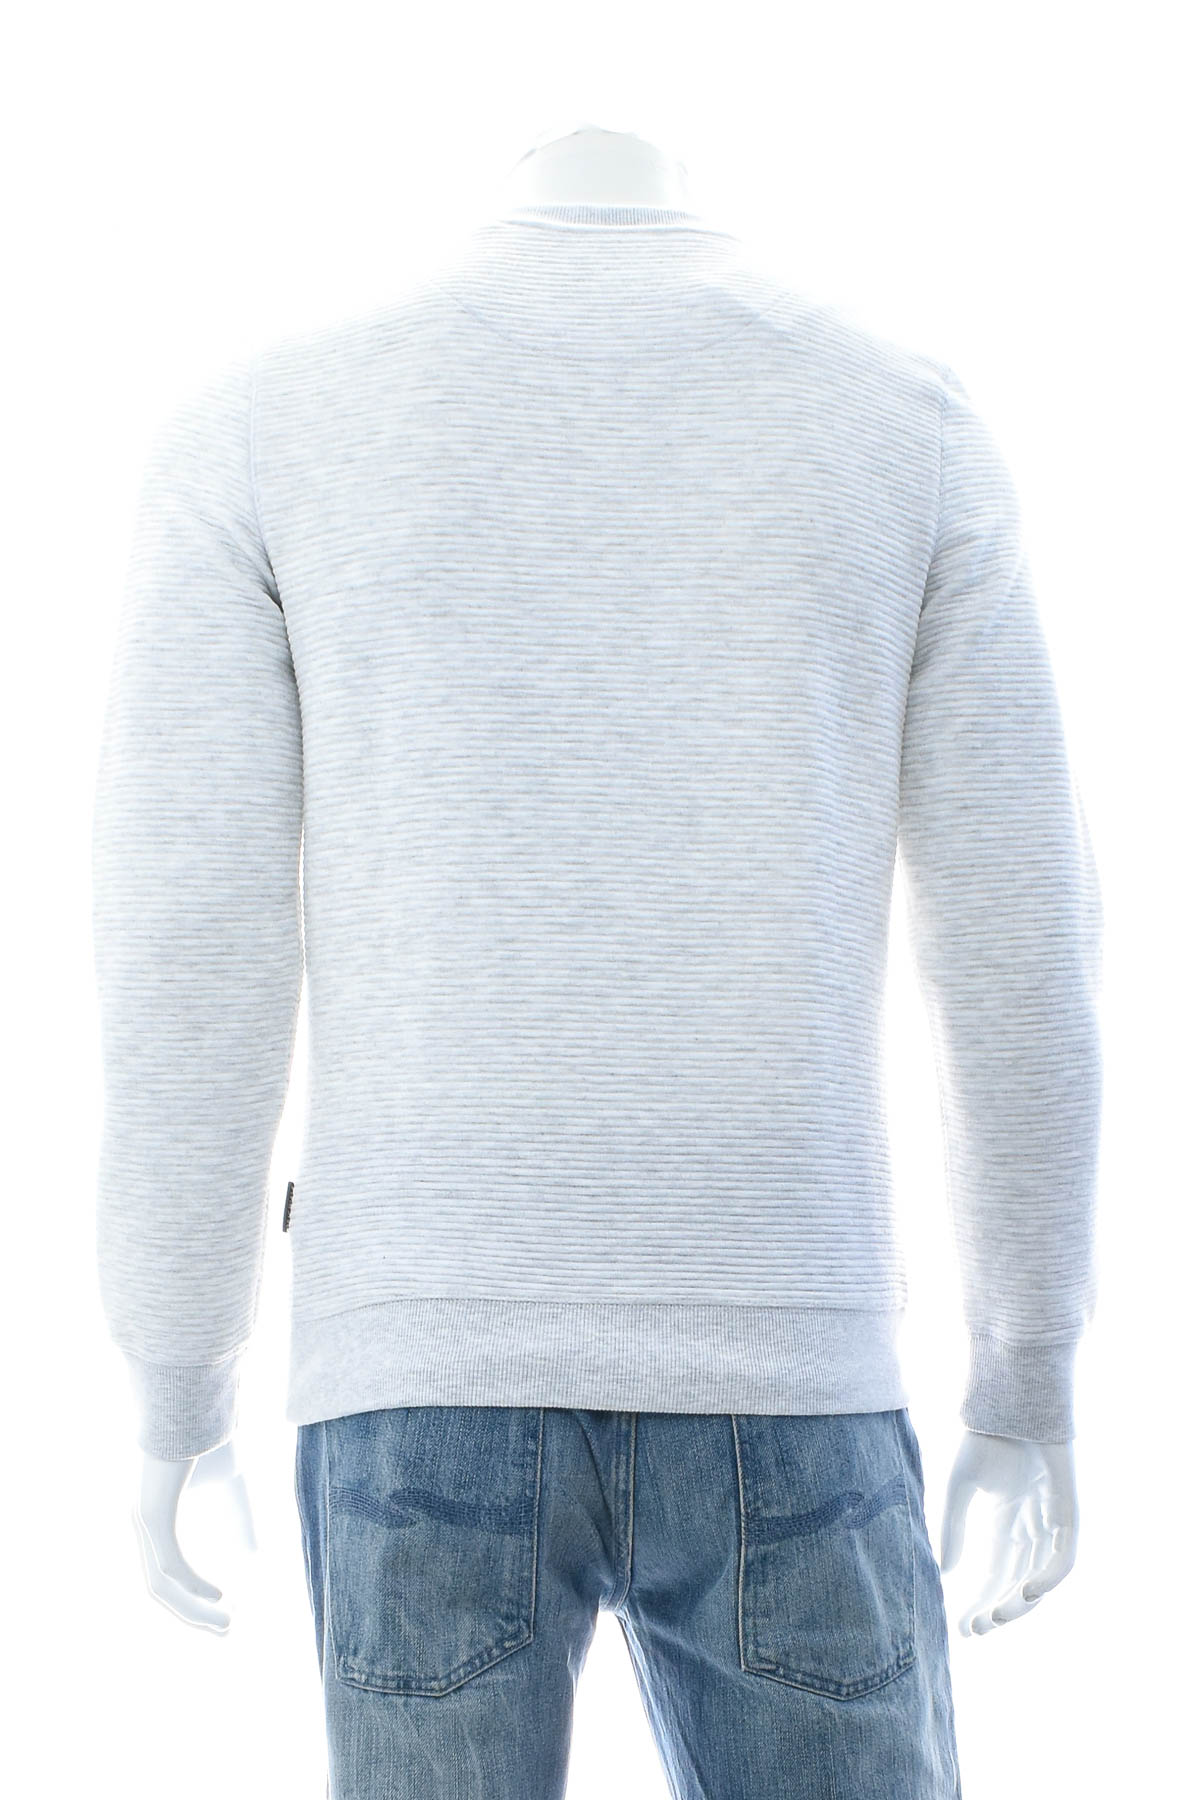 Men's sweater - Jean Pascale - 1